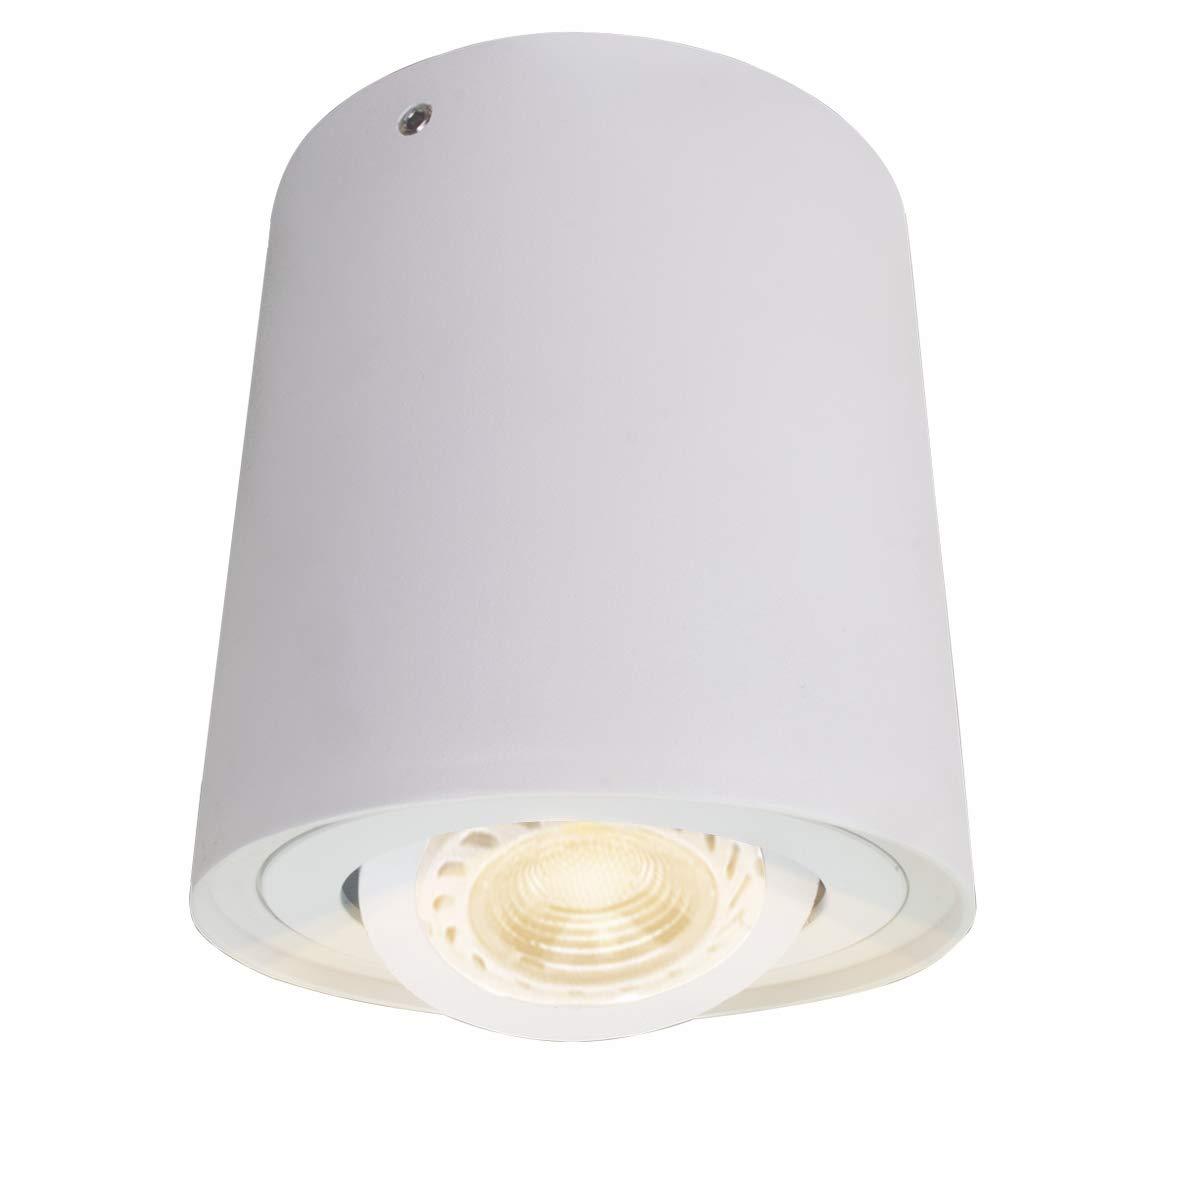 Budbuddy LED ceiling light rotatable Ceiling Spots spotlight for kitchen living room bedroom ceiling lamp Adjustable spot(includes 5W LED GU10 bulb) 220V